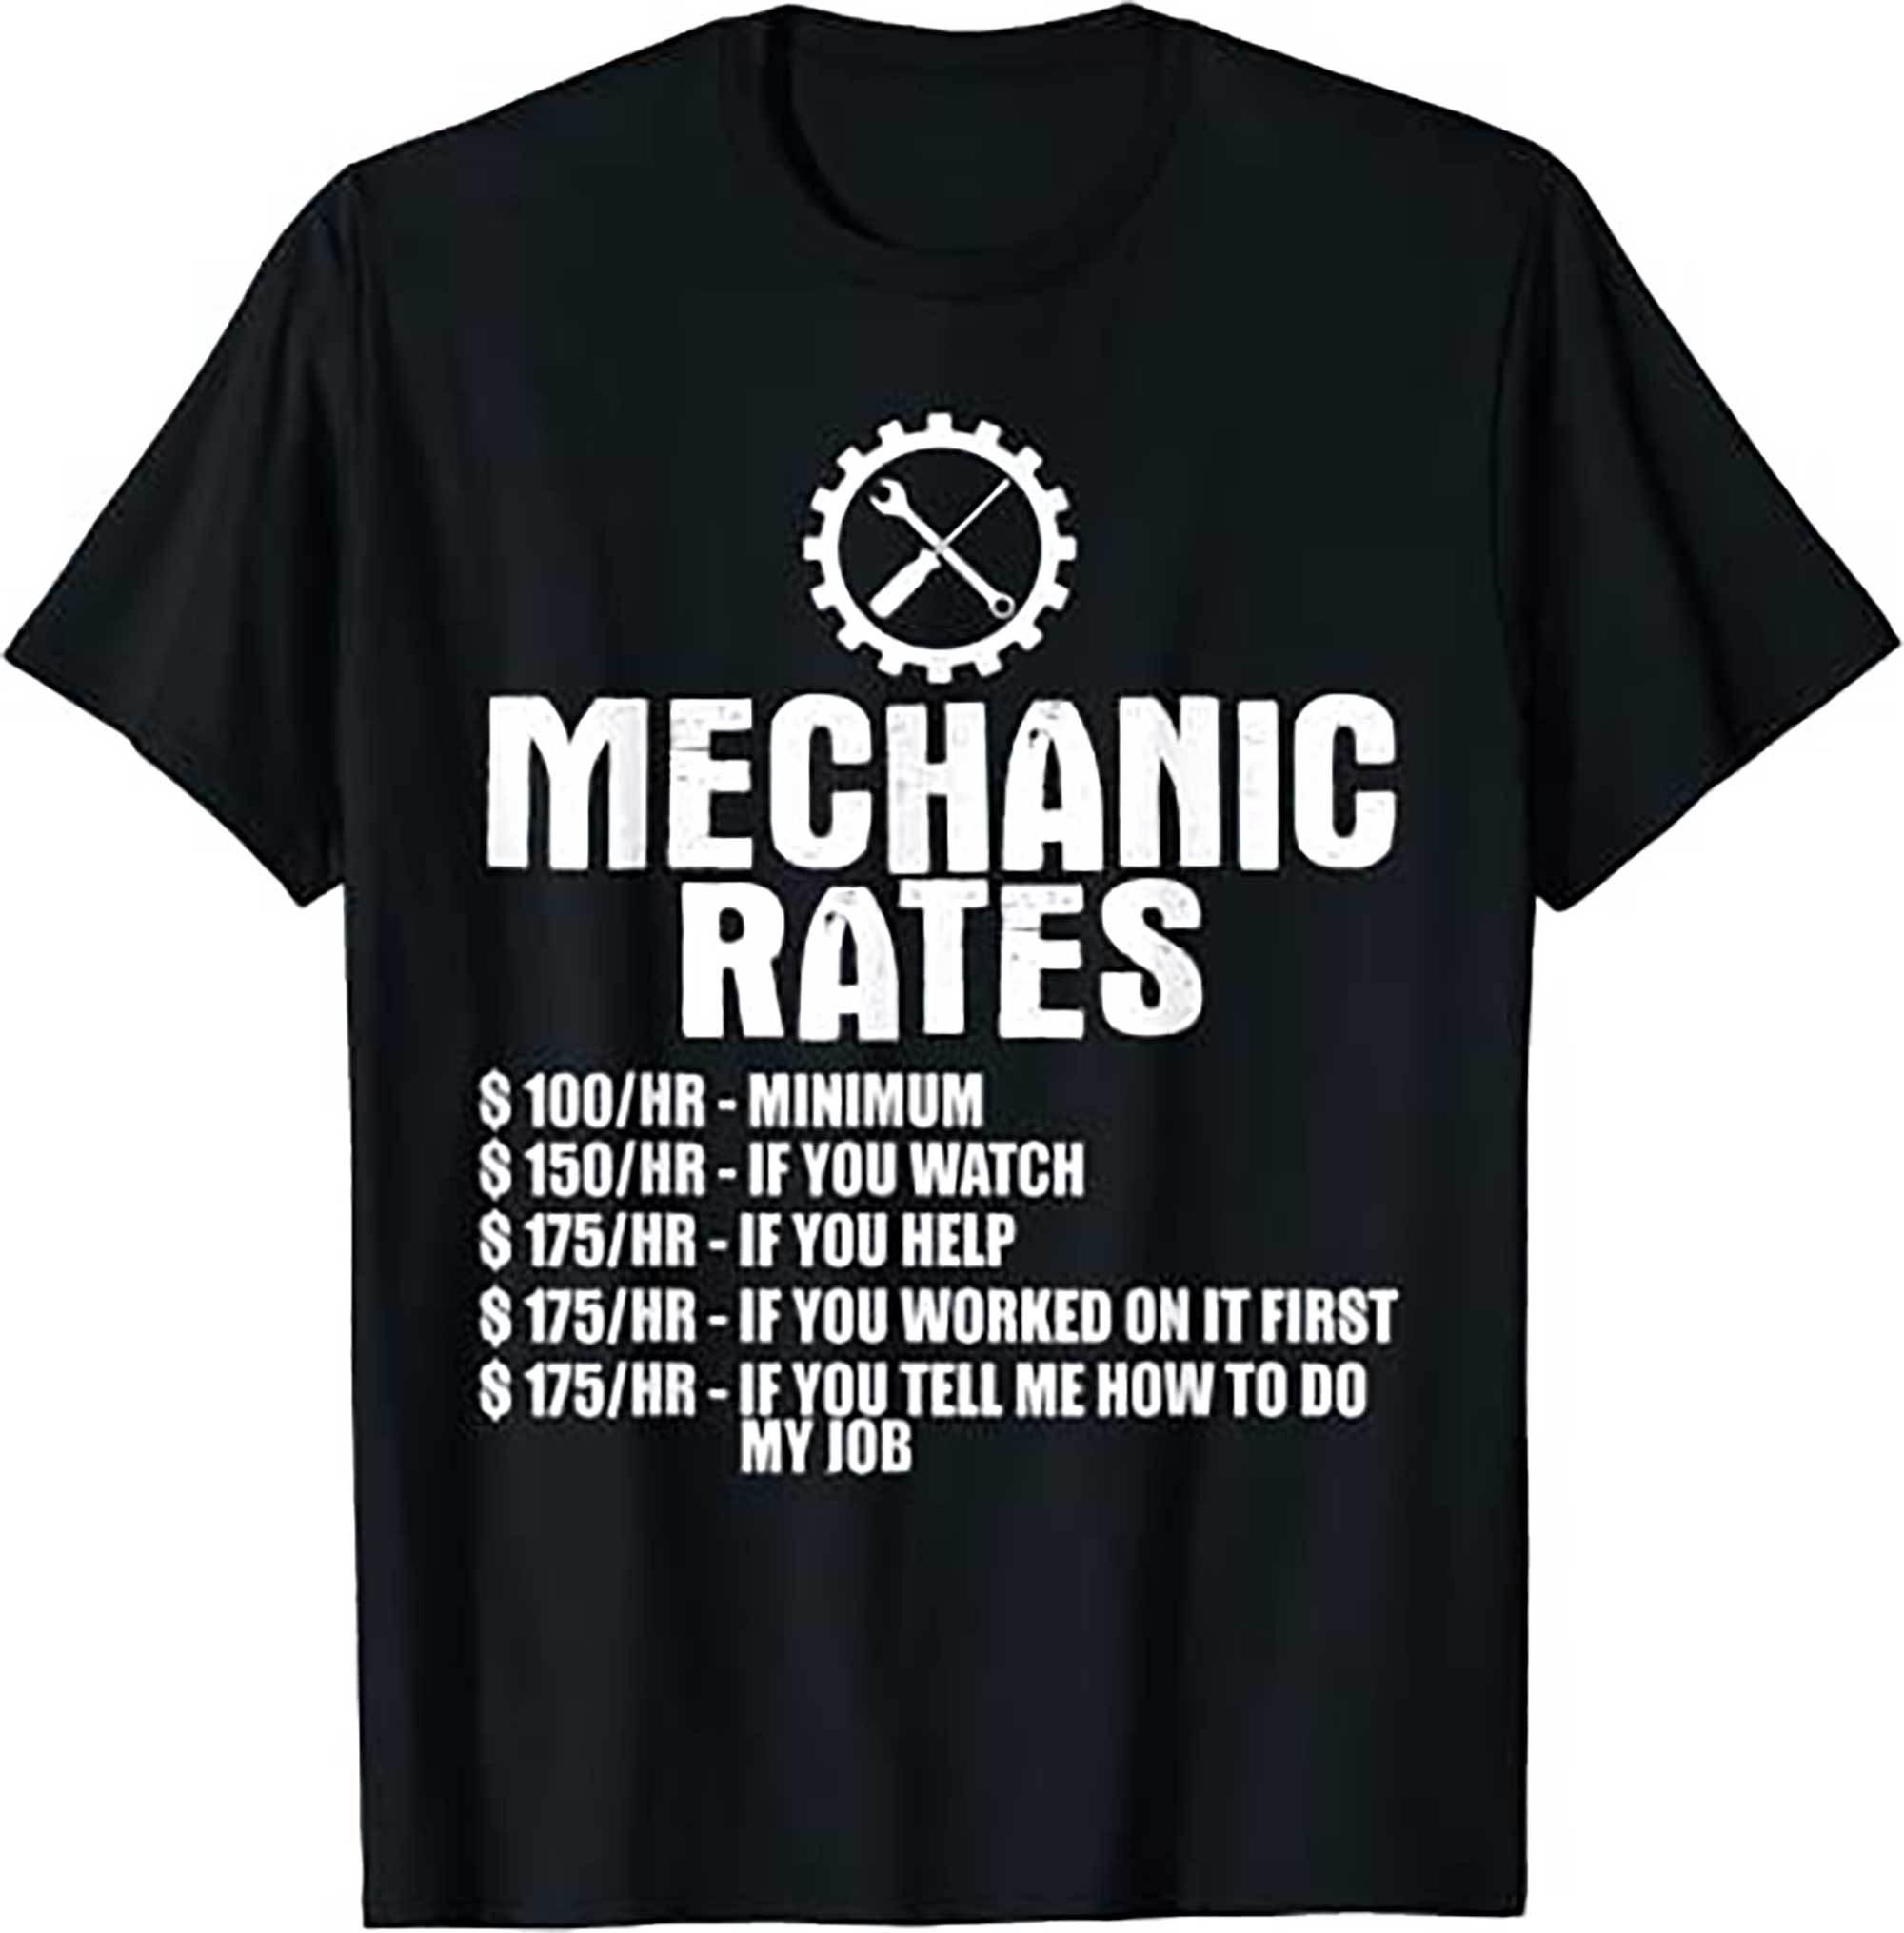 Skitongifts Mechanic Funny Gift, Mechanic Rates T Shirt Funny Shirts Hoodie Long Short Sleeve Casual Shirt